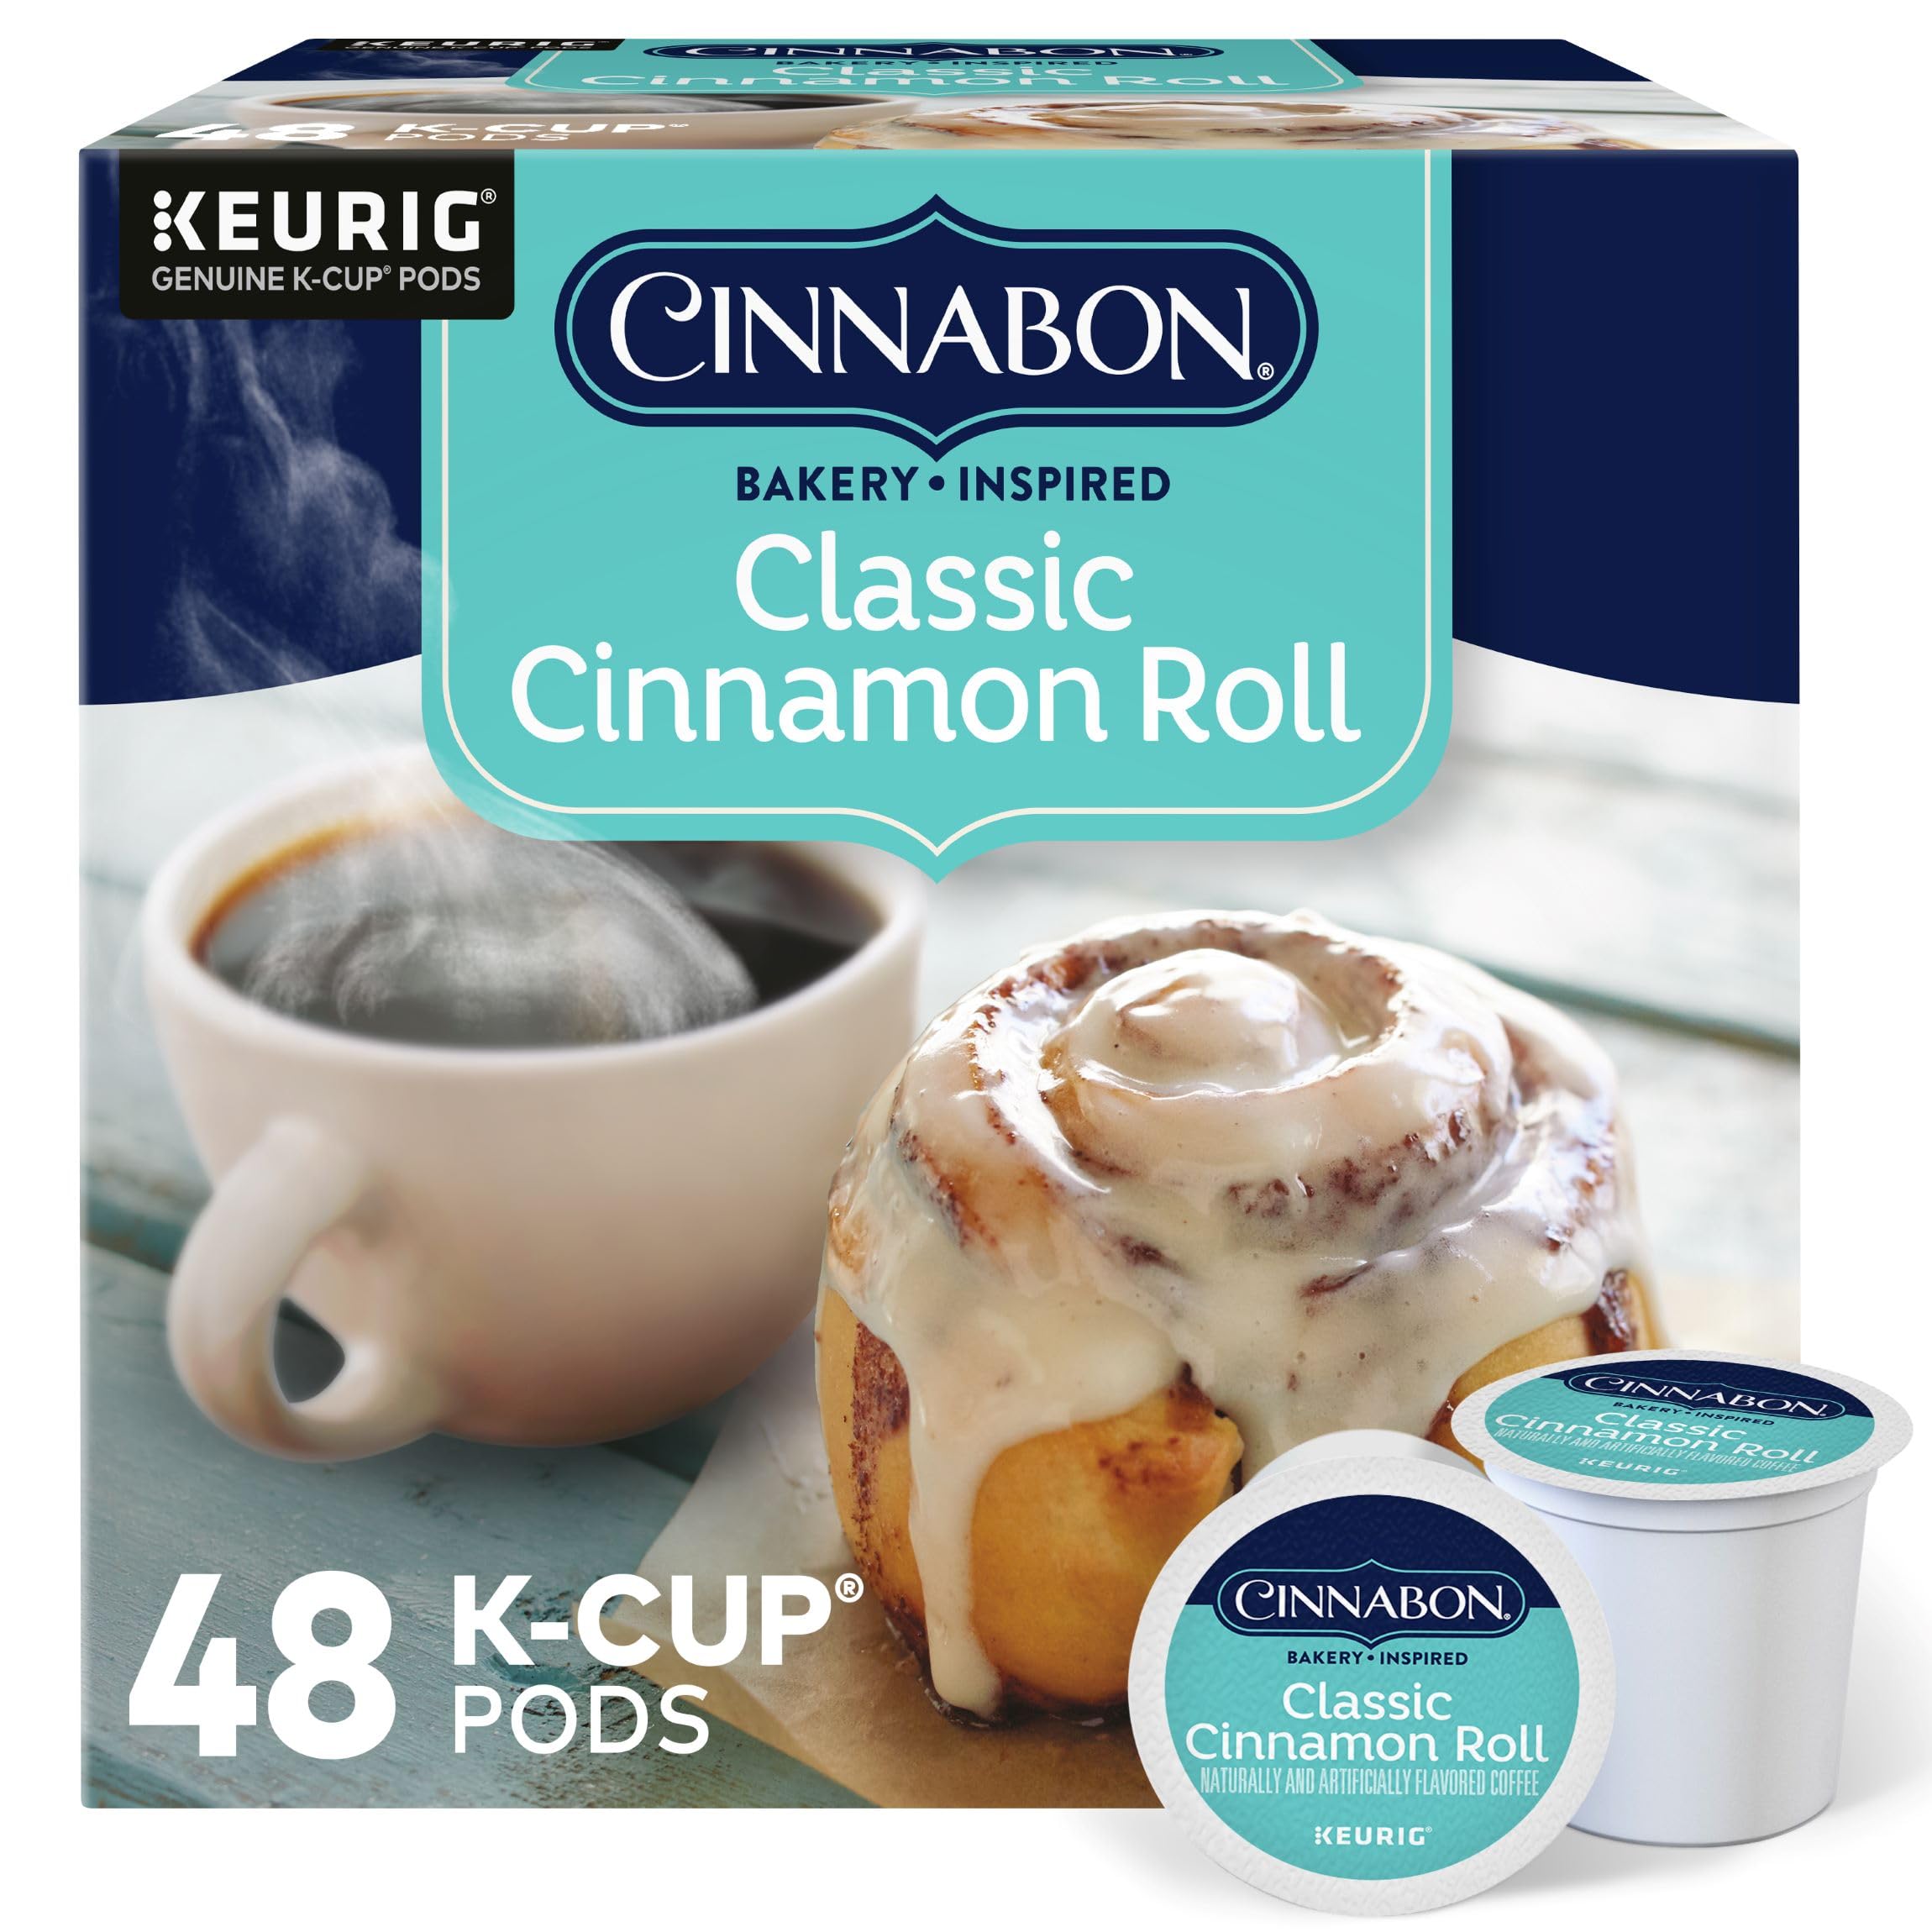 Cinnabon Classic Cinnamon Roll Keurig Single-Serve K-Cup Pods, Light Roast Coffee, 48 Count $16.99 @Amazon